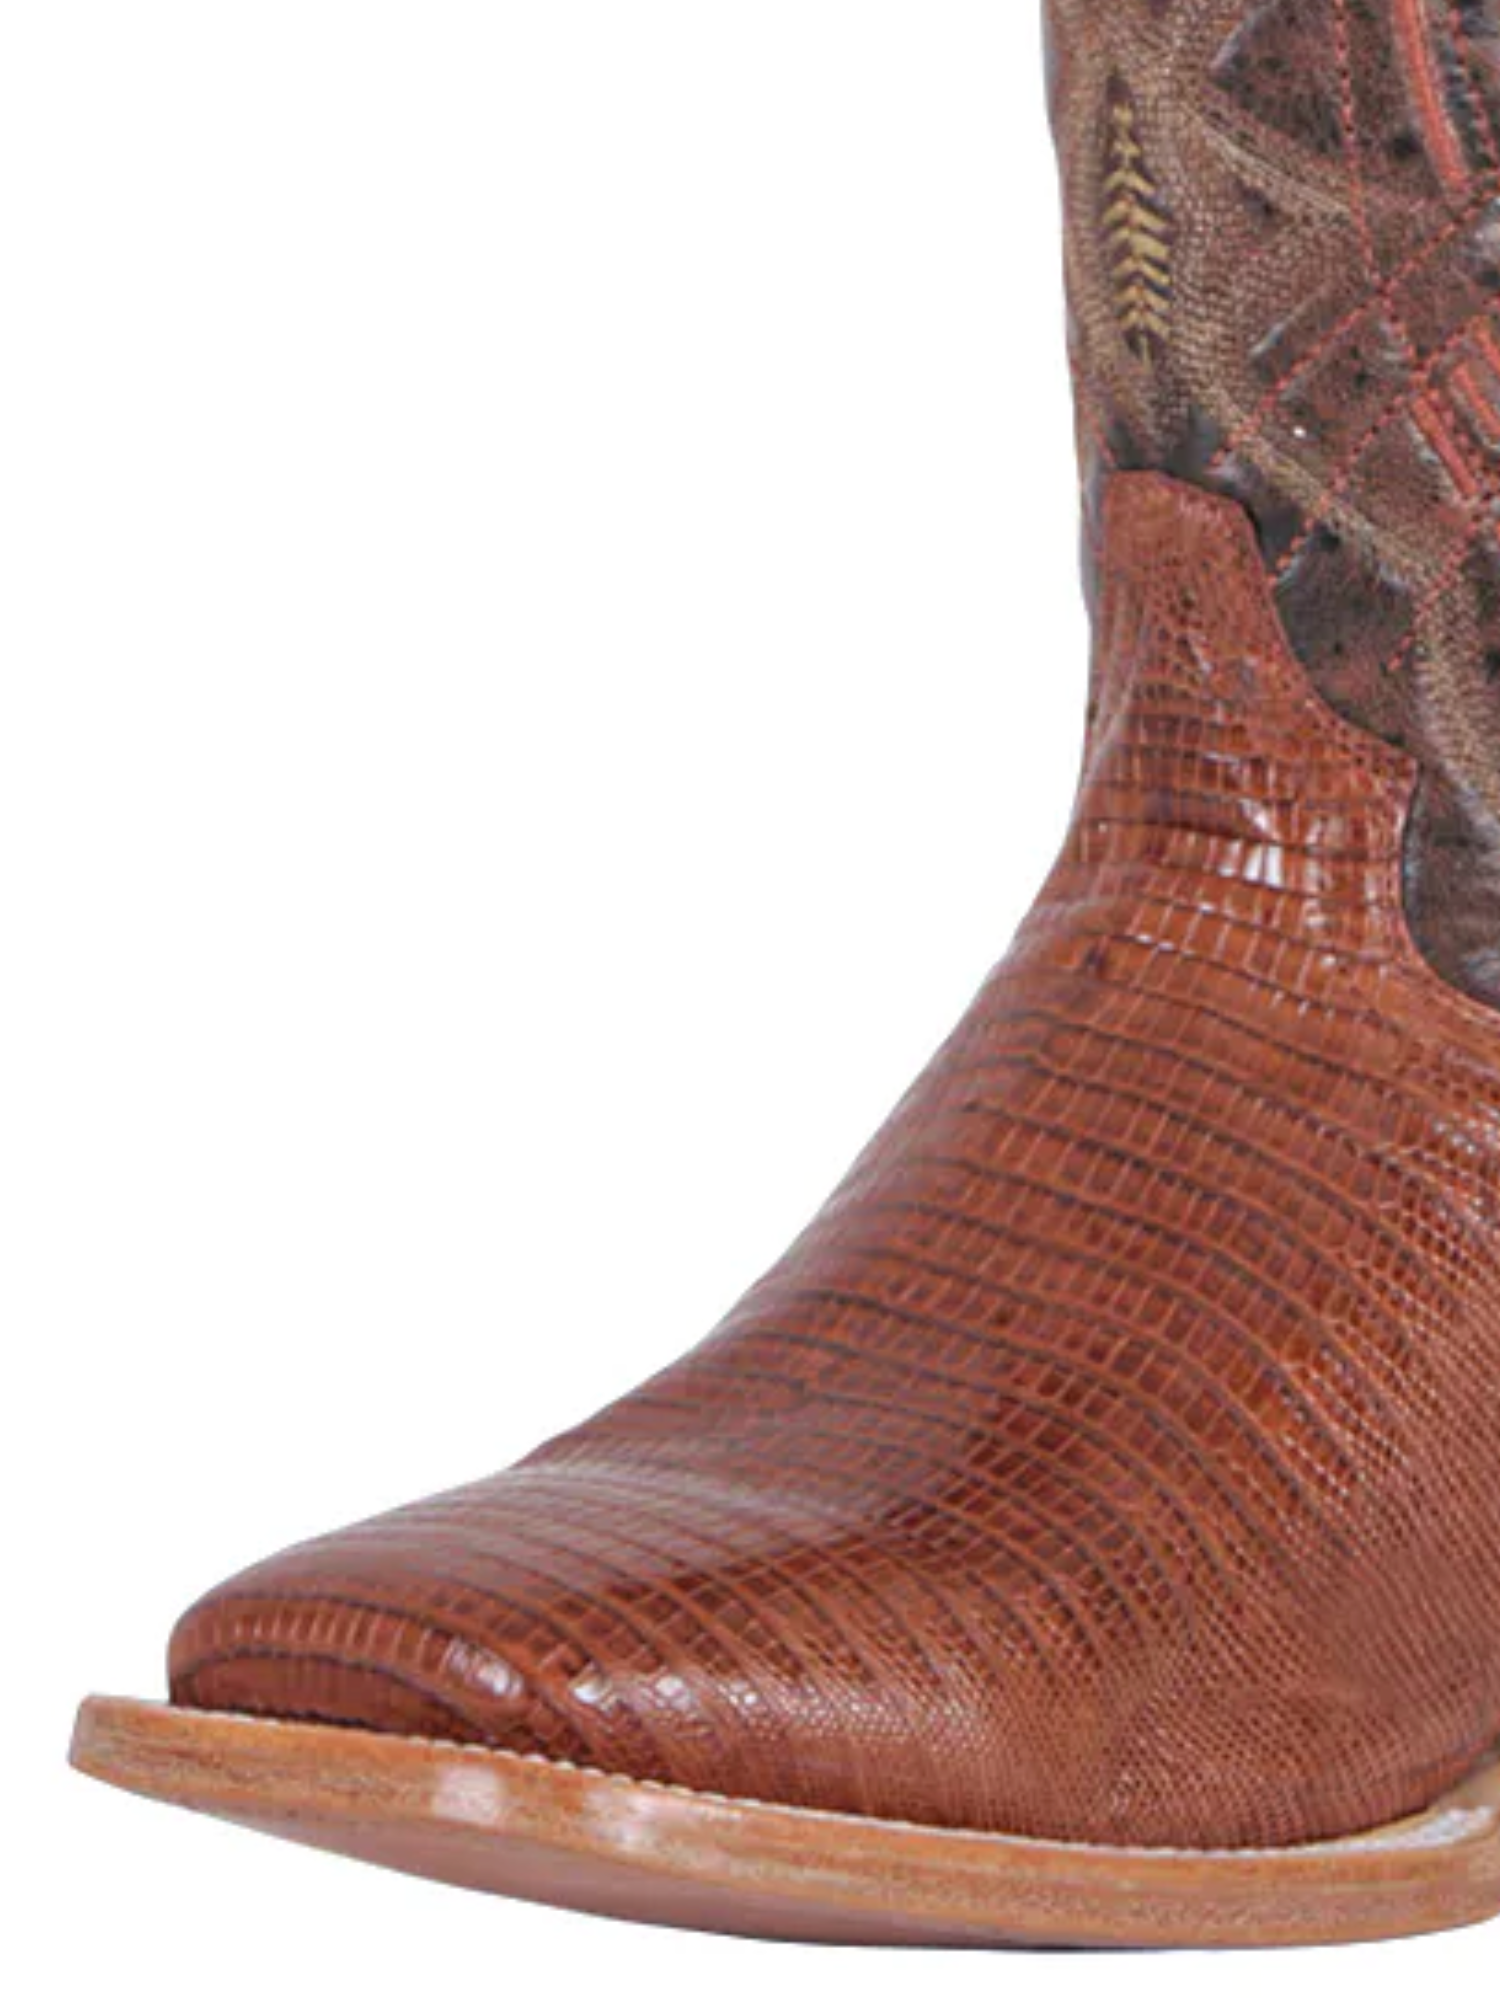 Botas Vaqueras Rodeo Exoticas de Lizard Original para Hombre 'Centenario' - ID: 124417 Cowboy Boots Centenario 